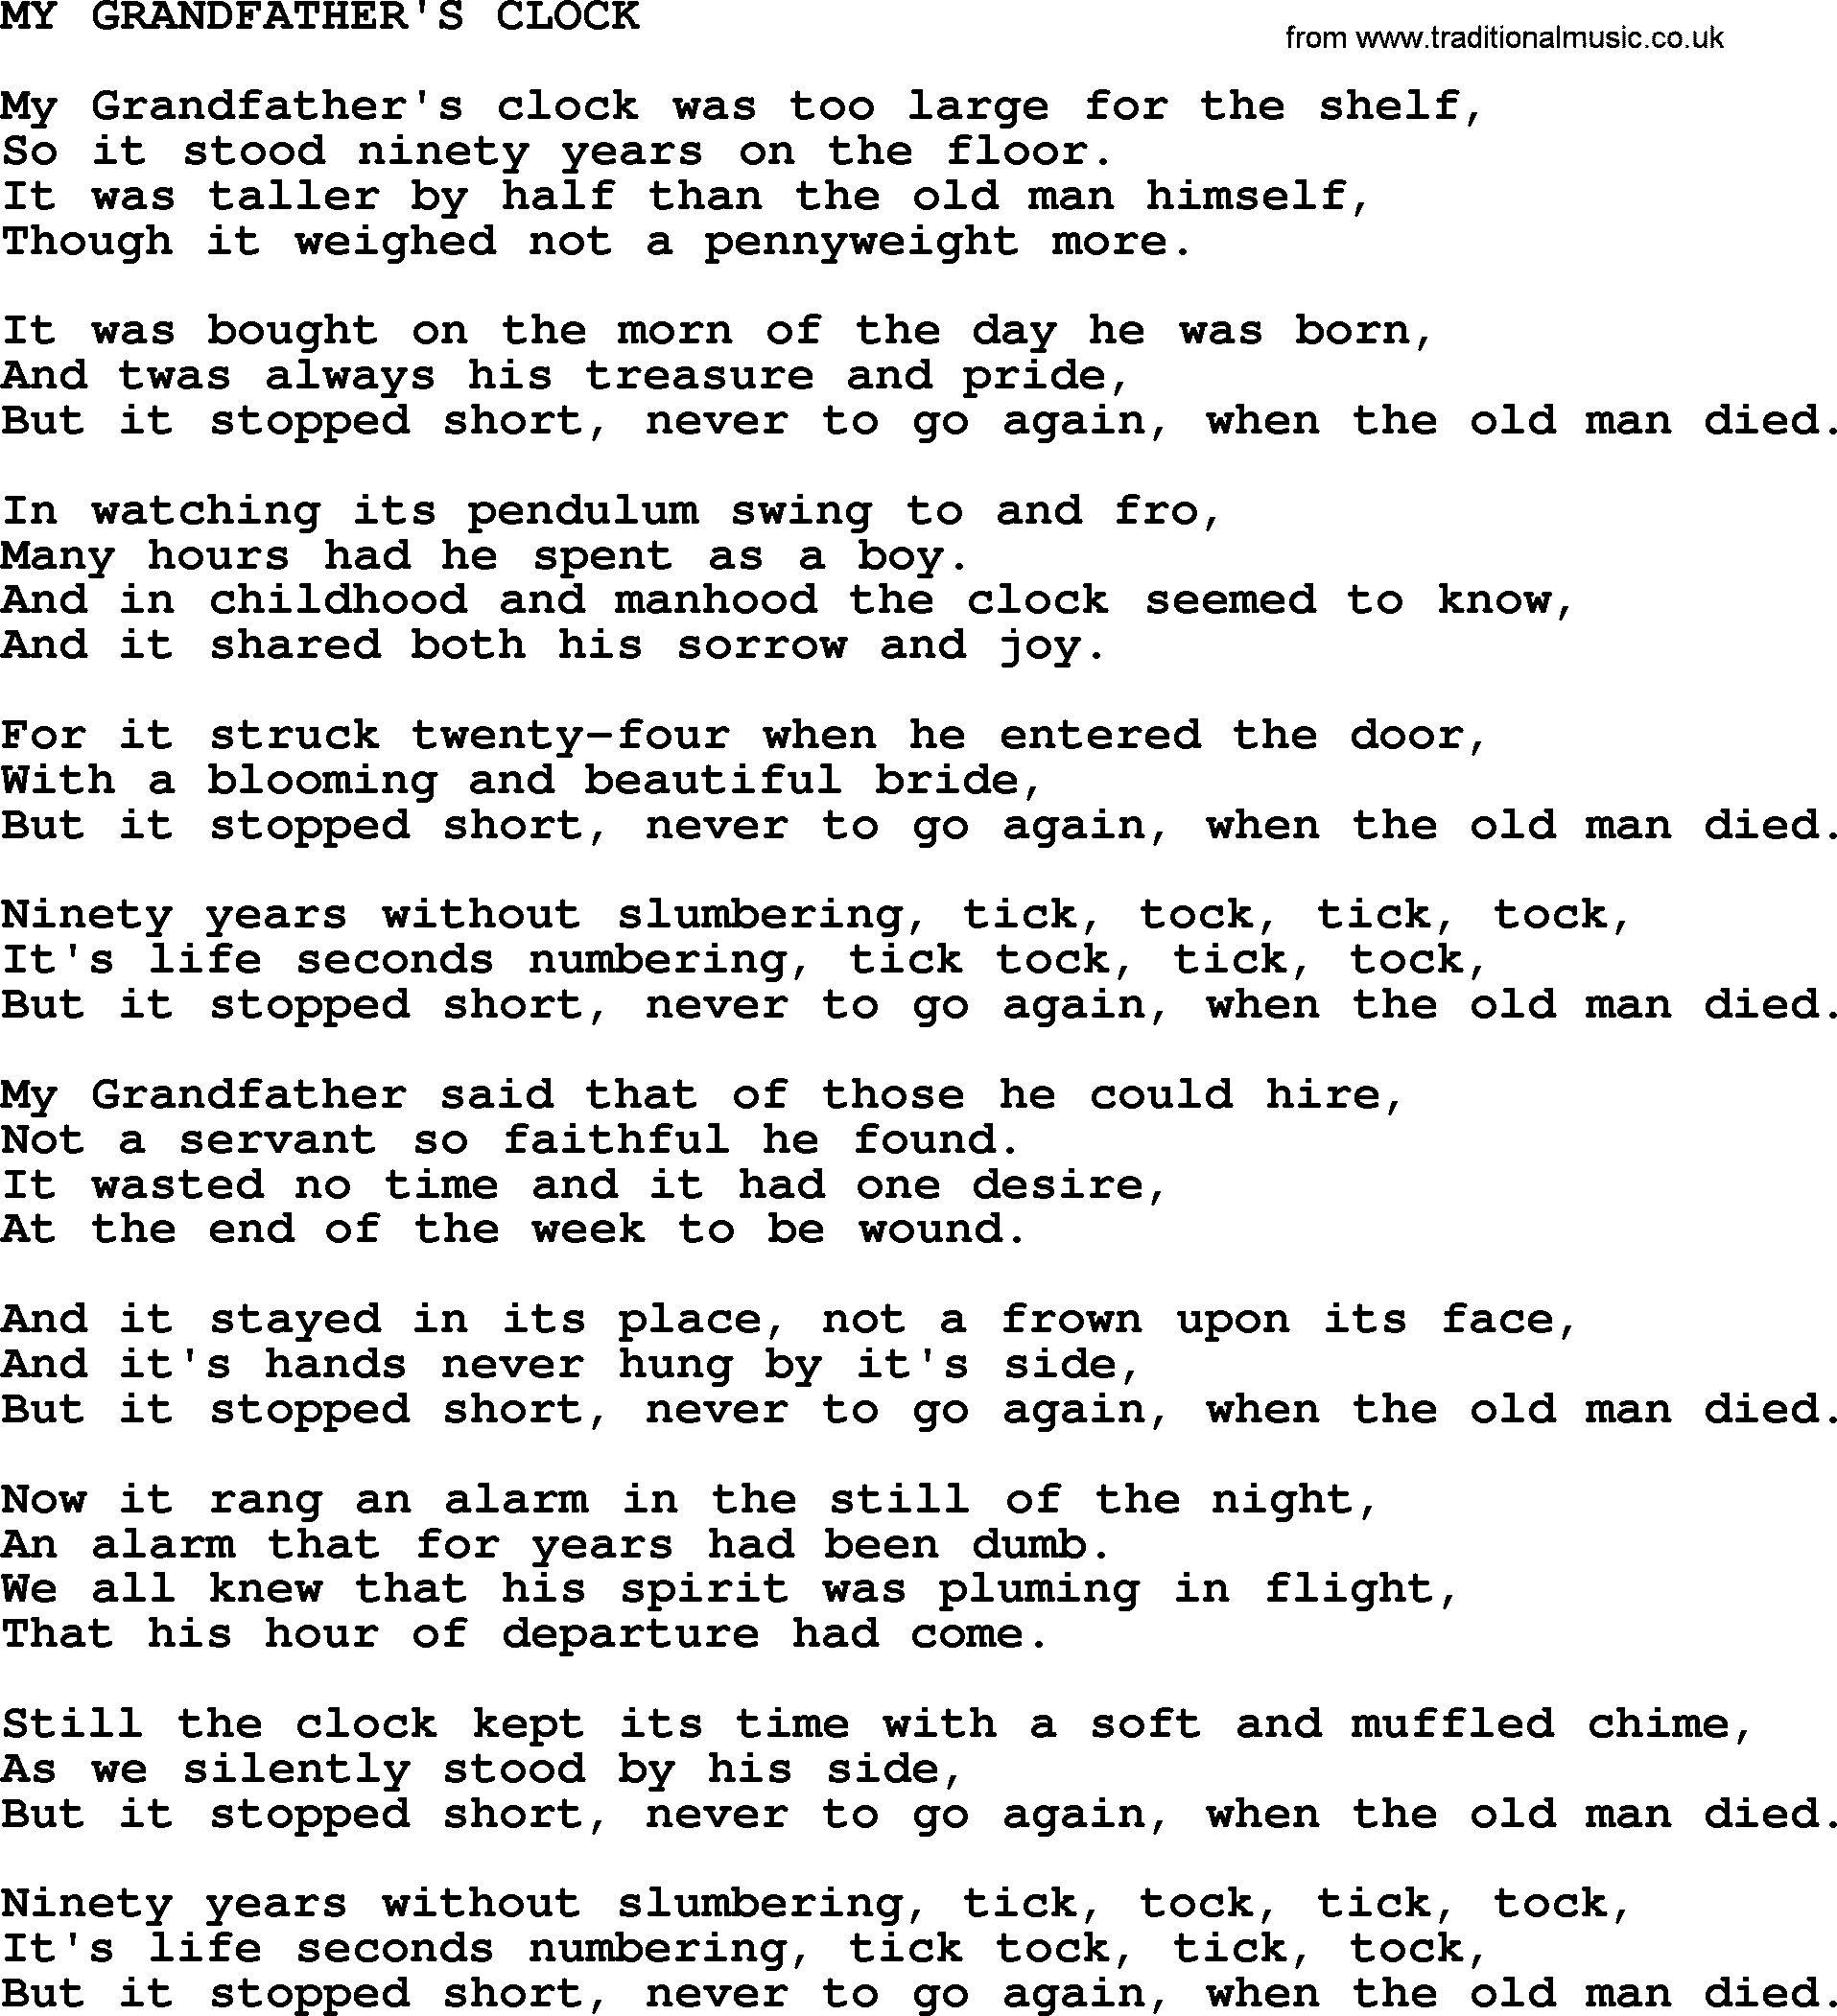 Johnny Cash song My Grandfather's Clock.txt lyrics